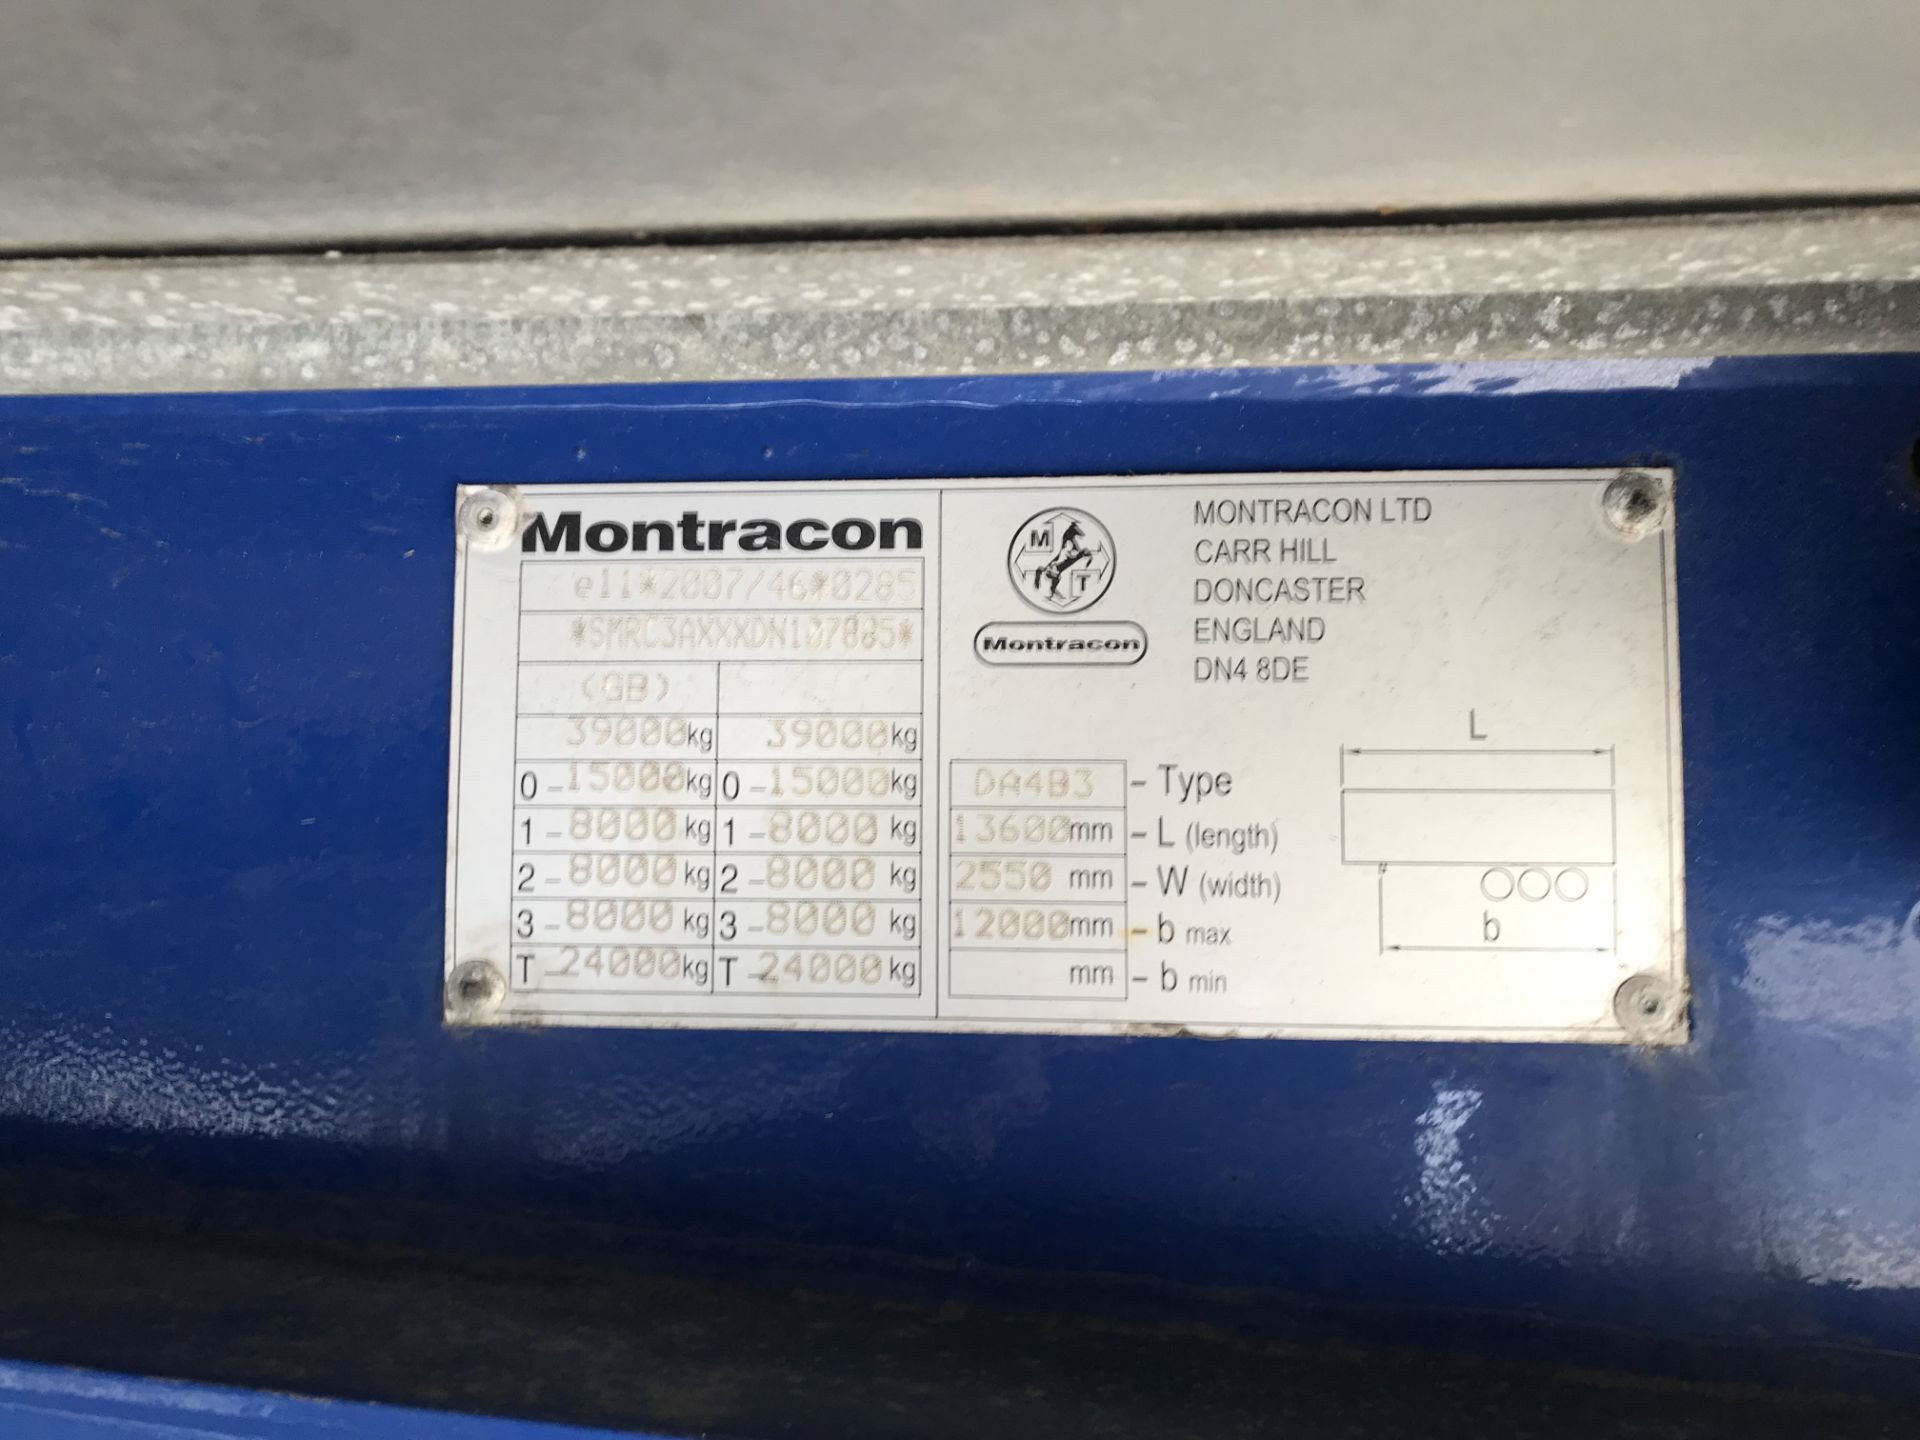 Montracon 13.6m Tri-Axle Curtainside Single Deck Semi-Trailer, chassis no. SMRC3AXXXDN107885, ID no. - Image 6 of 6